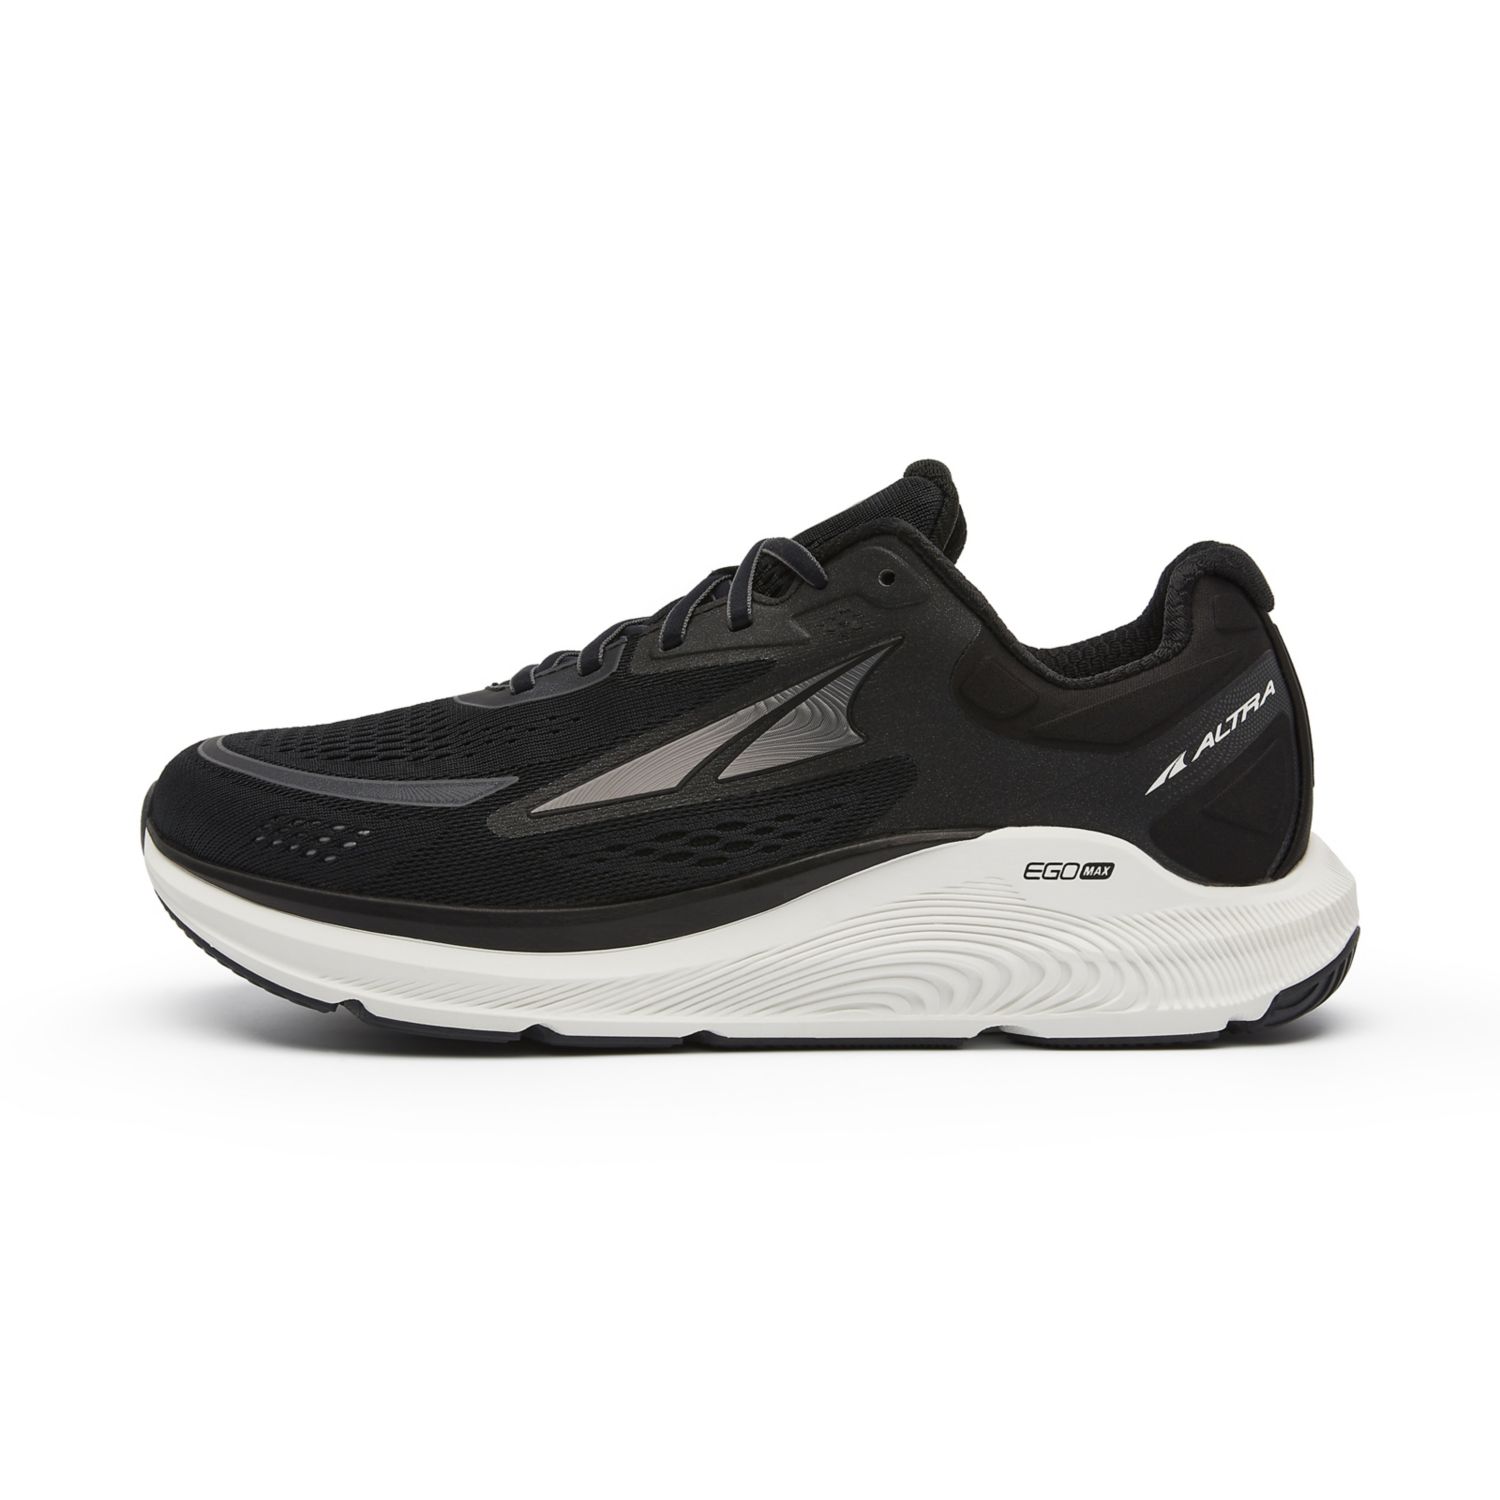 Black Altra Paradigm 6 Men's Road Running Shoes | KSA-13249079